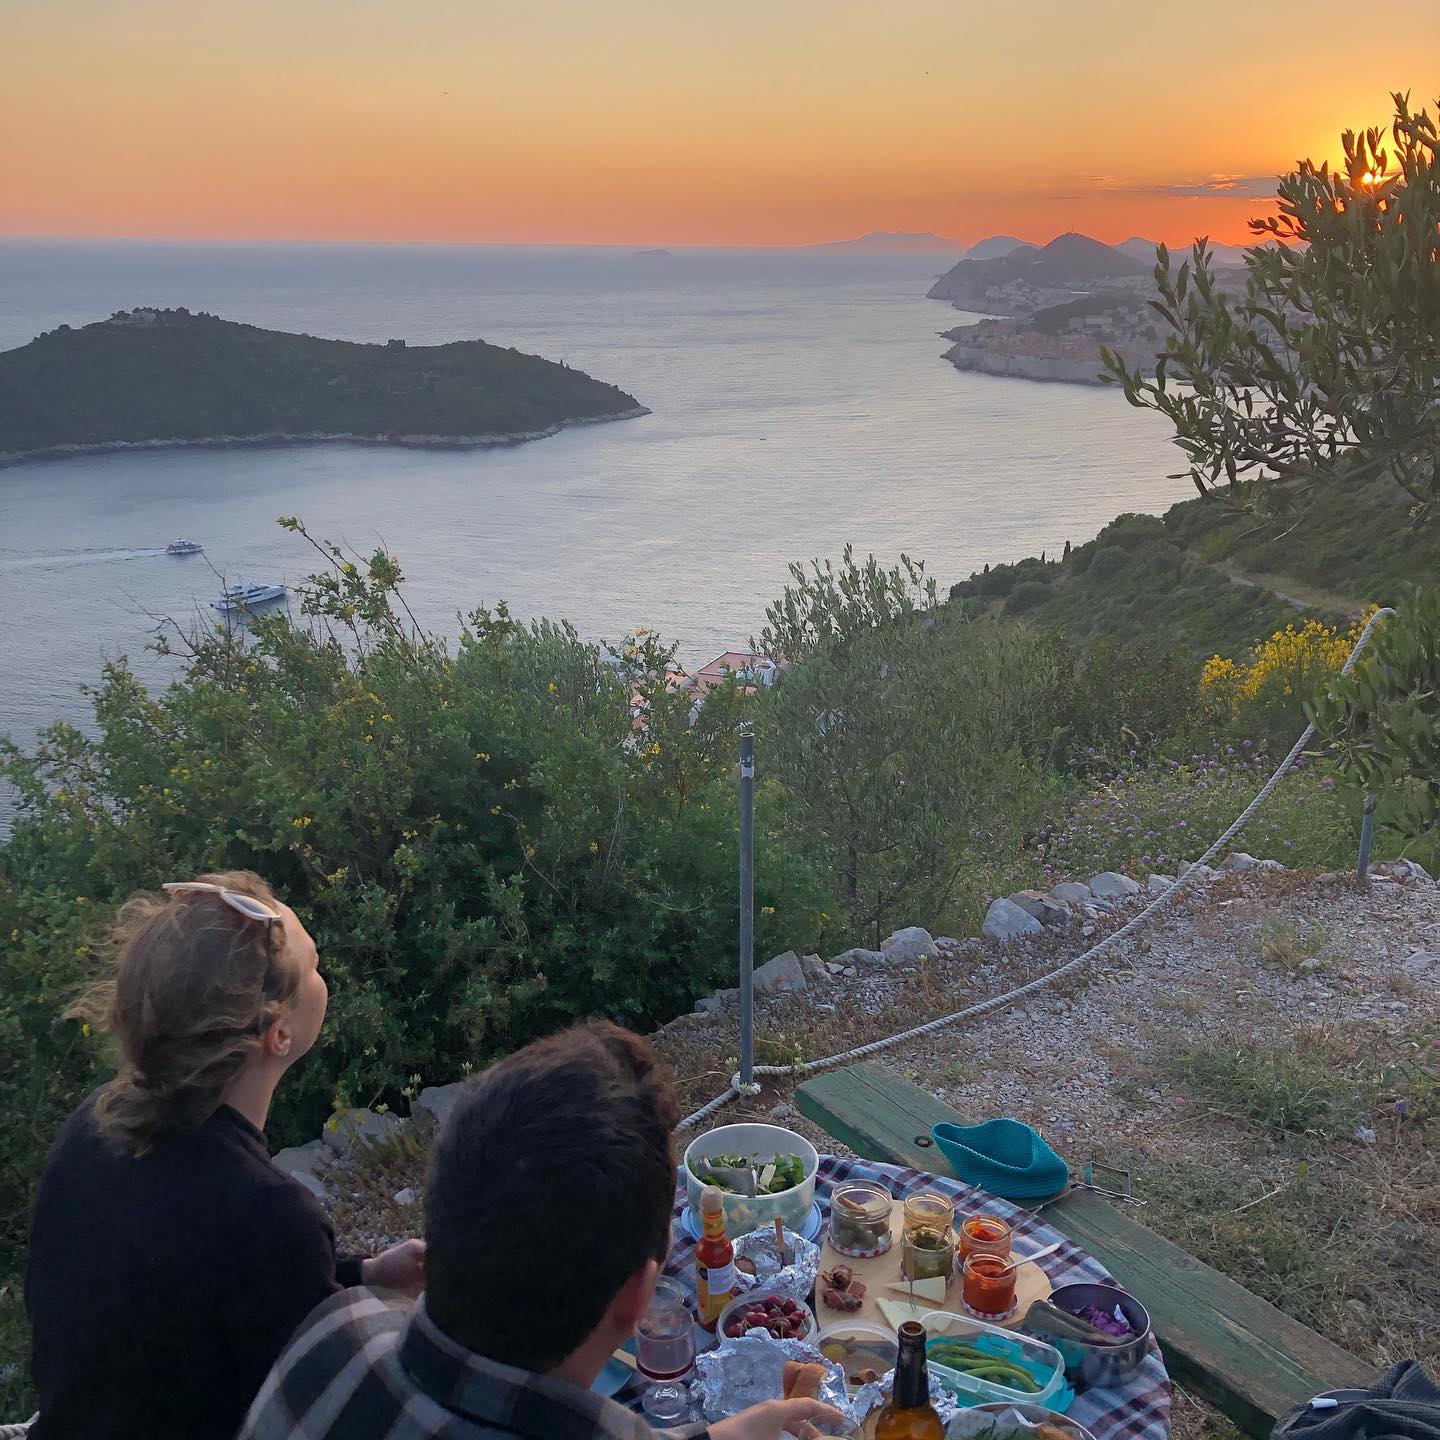 An incredible sunset picnic